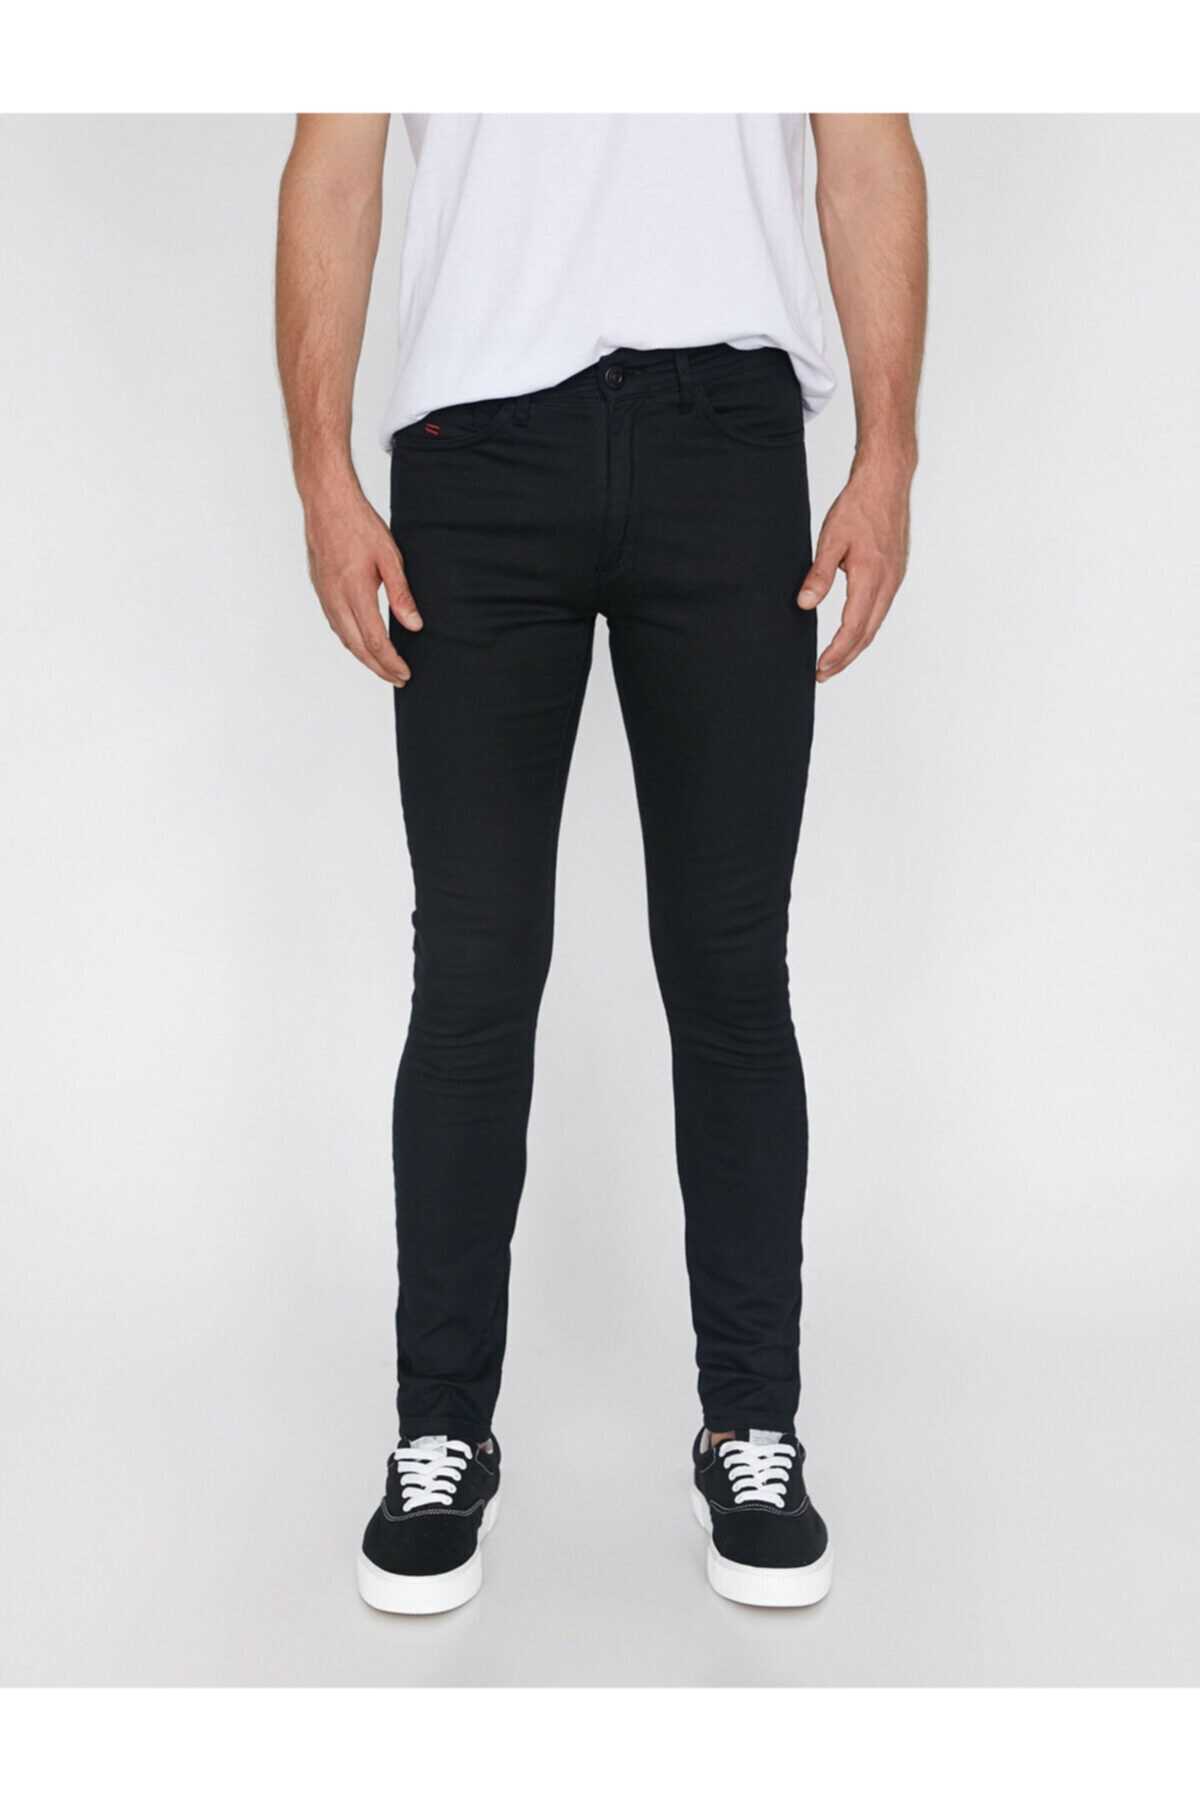 شلوار جین مردانه با قیمت شیک کوتون رنگ مشکی کد ty31715195